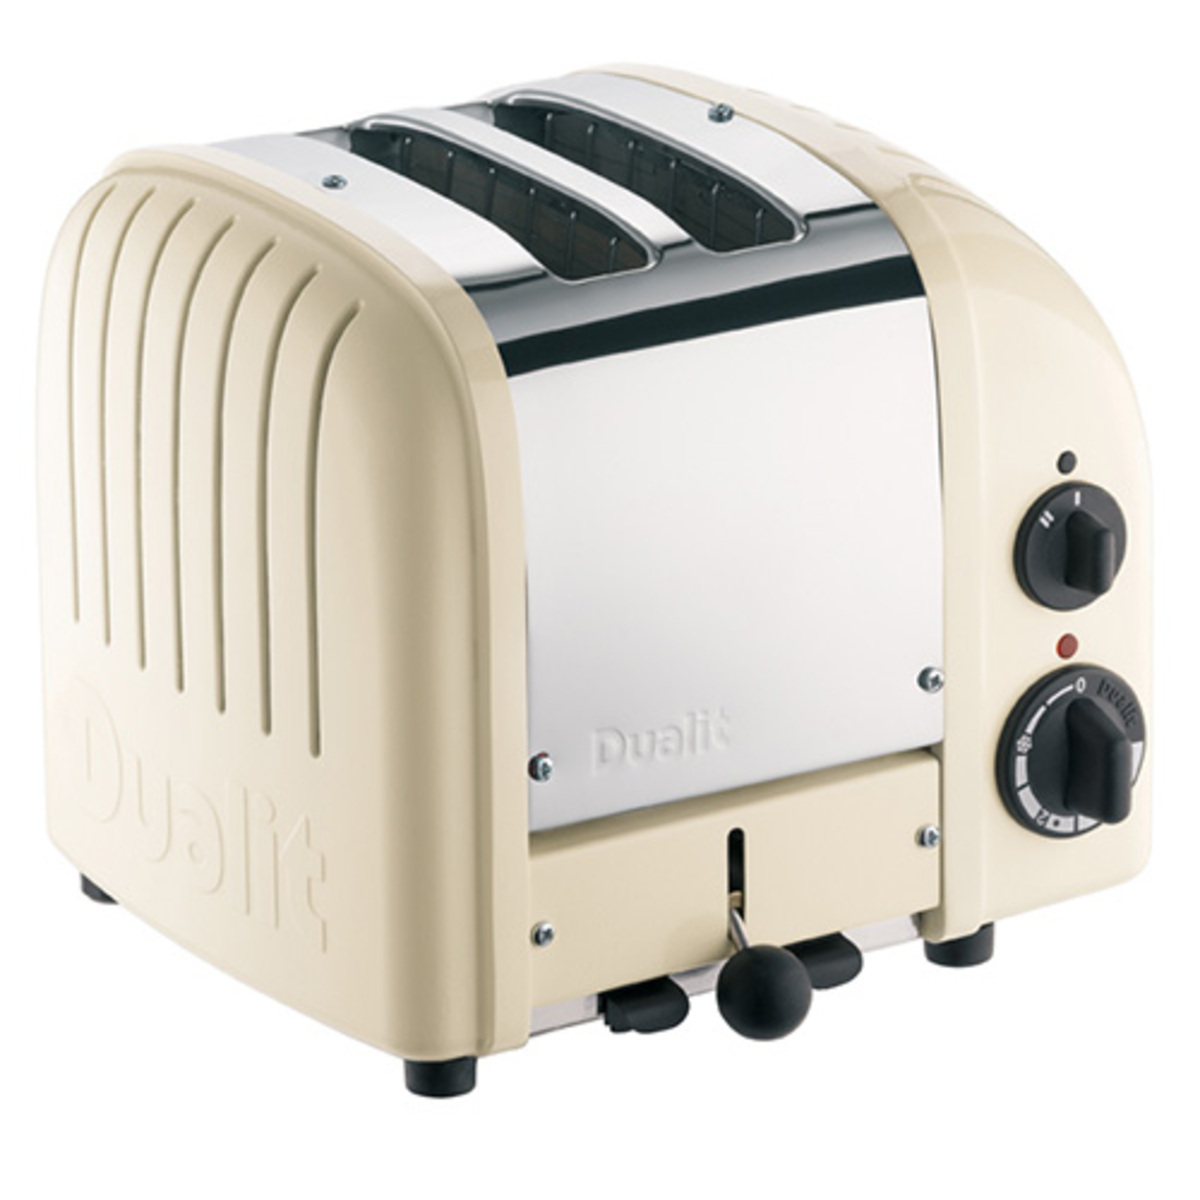 Dualit 20443 Classic Vario AWS 2 Slot Toaster, Cream